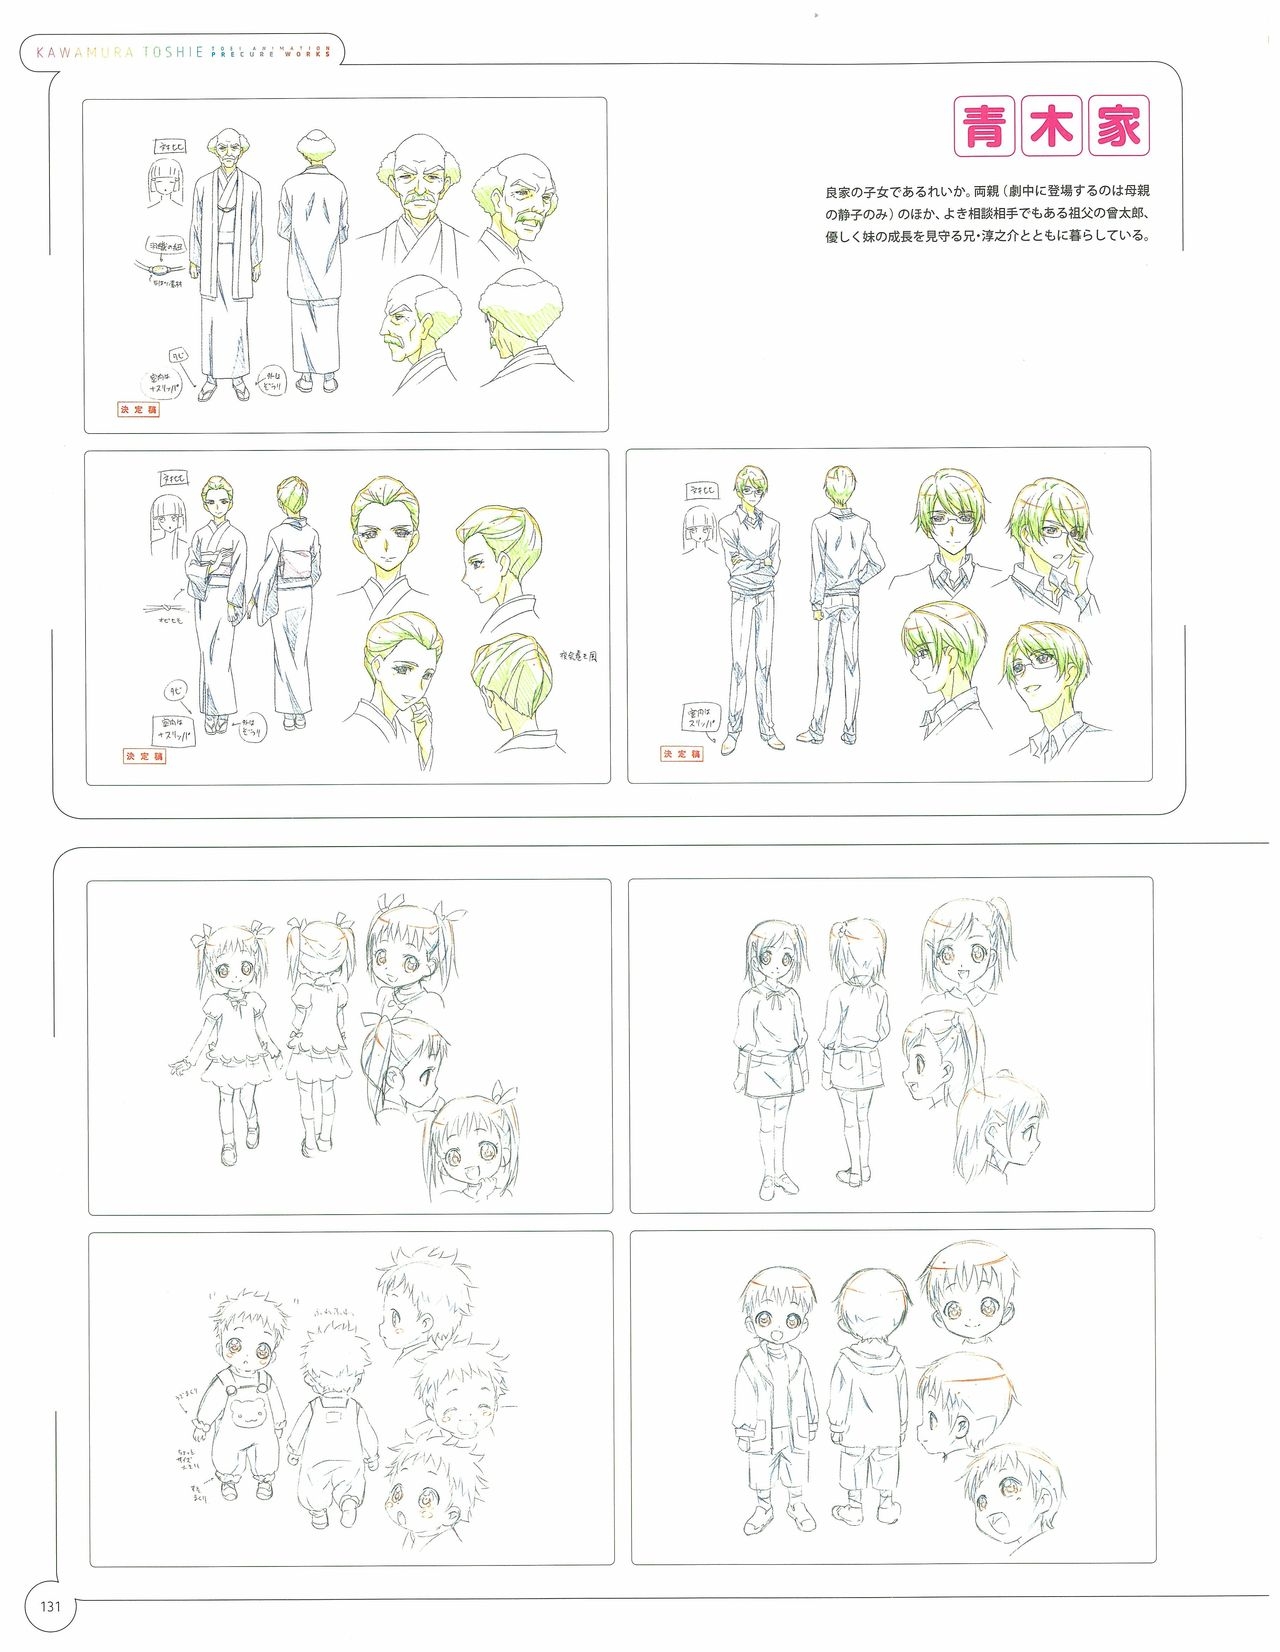 Kawamura Toshie - Toei Animation Precure Works 131